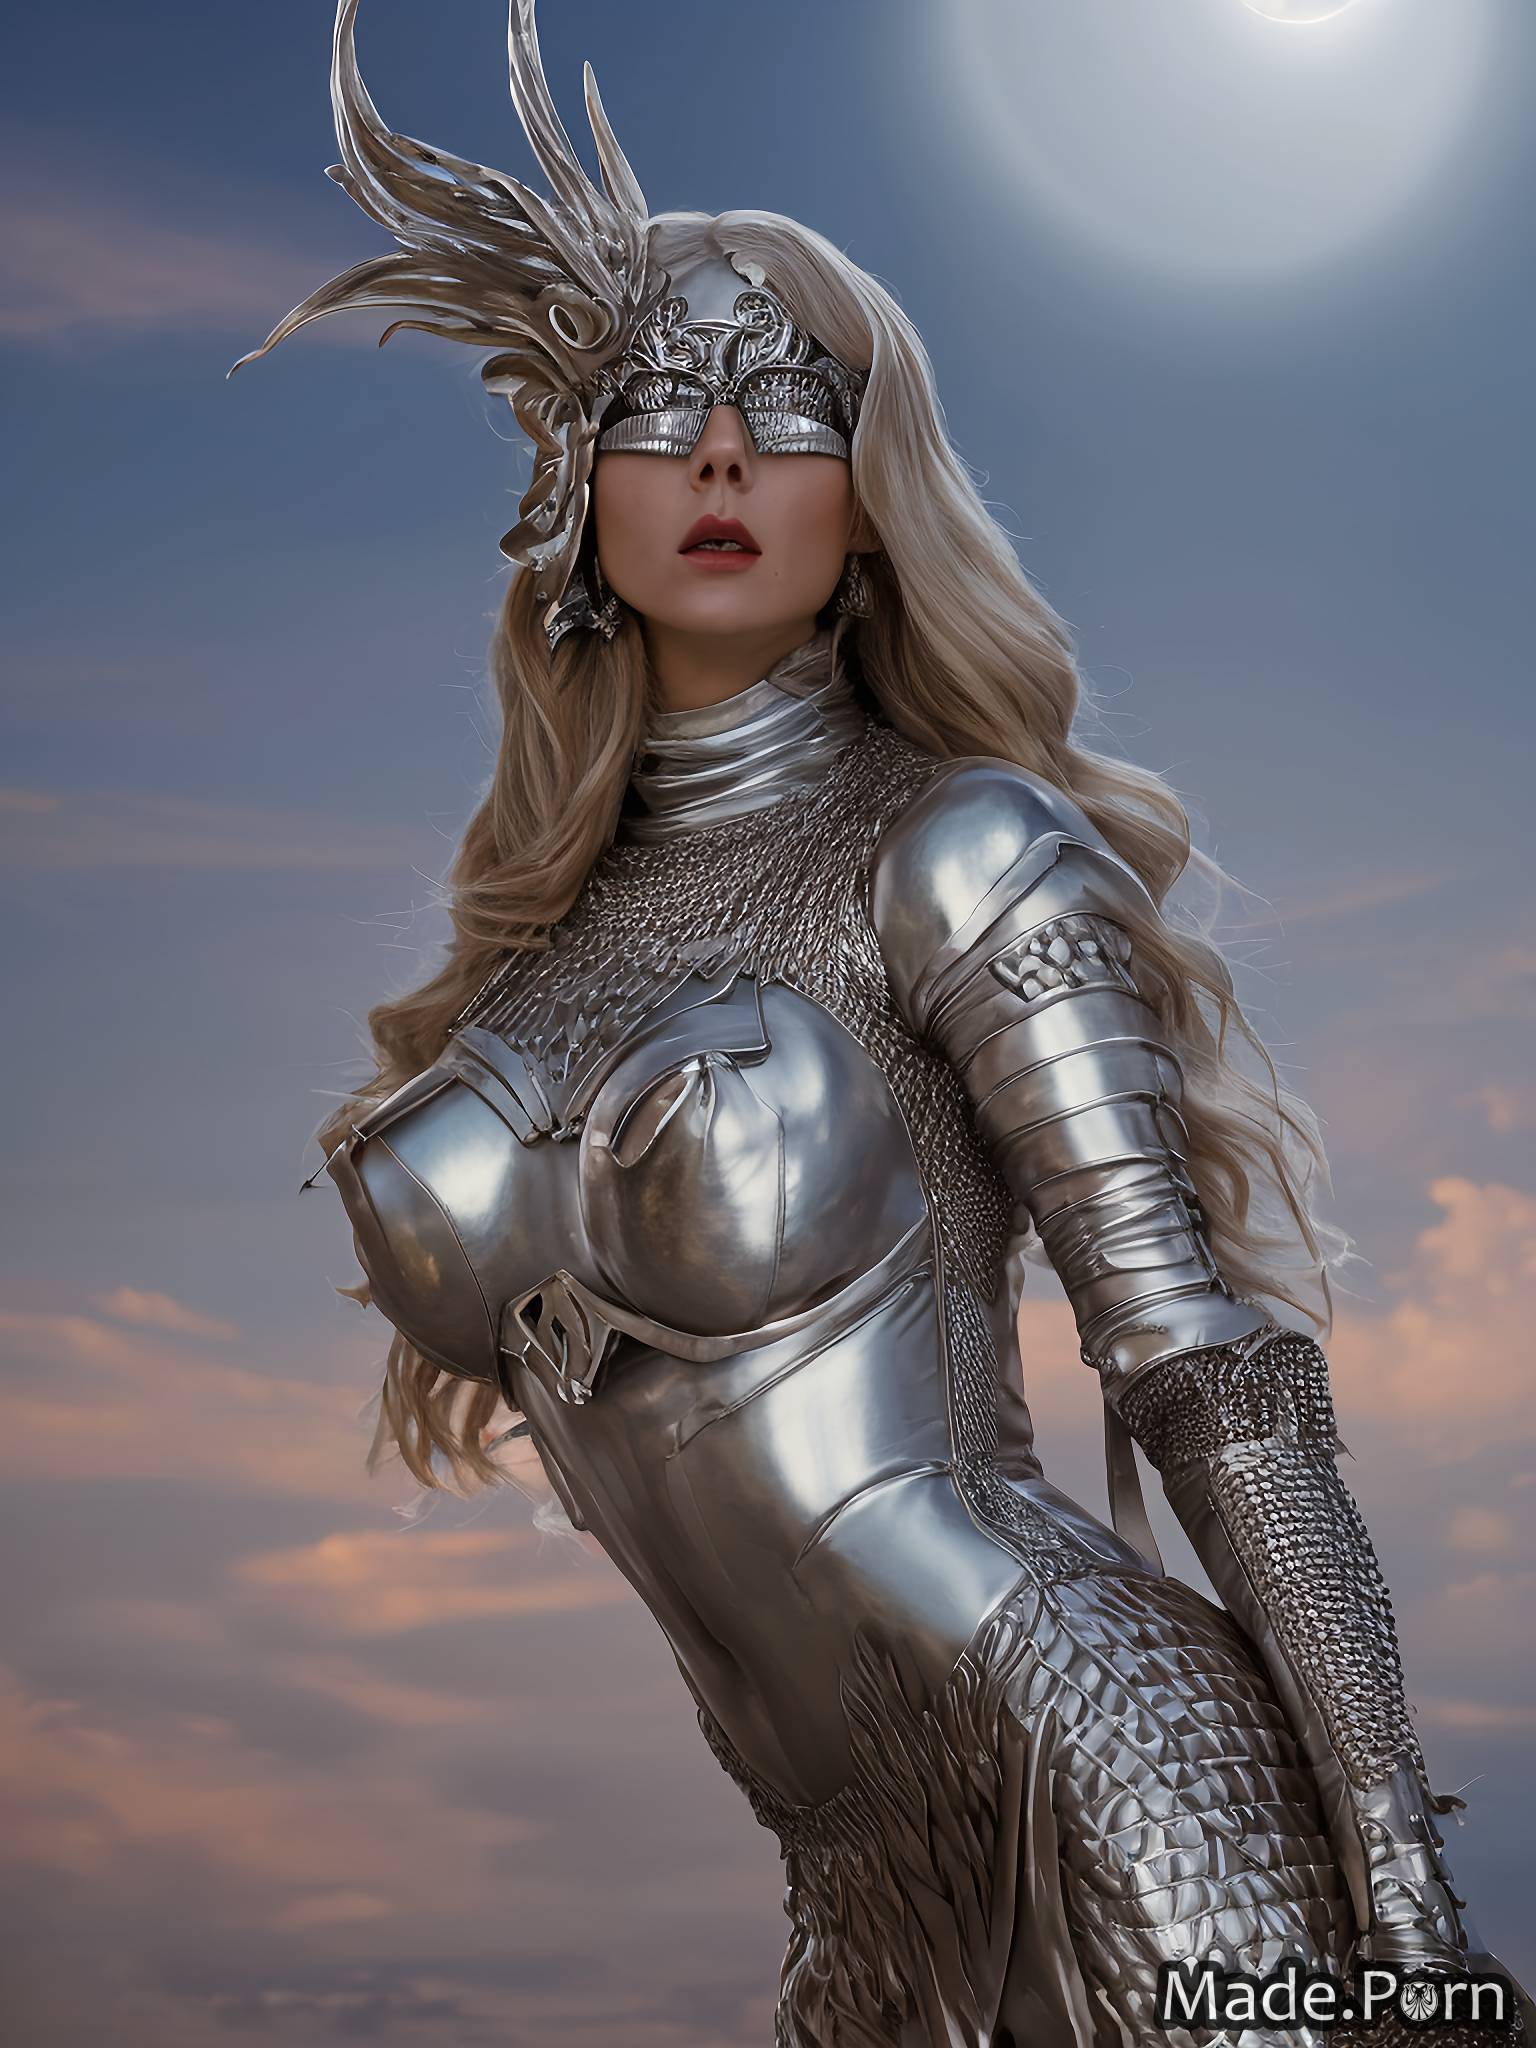 chrome venetian mask sunset surprised fantasy armor aluminum natural tits